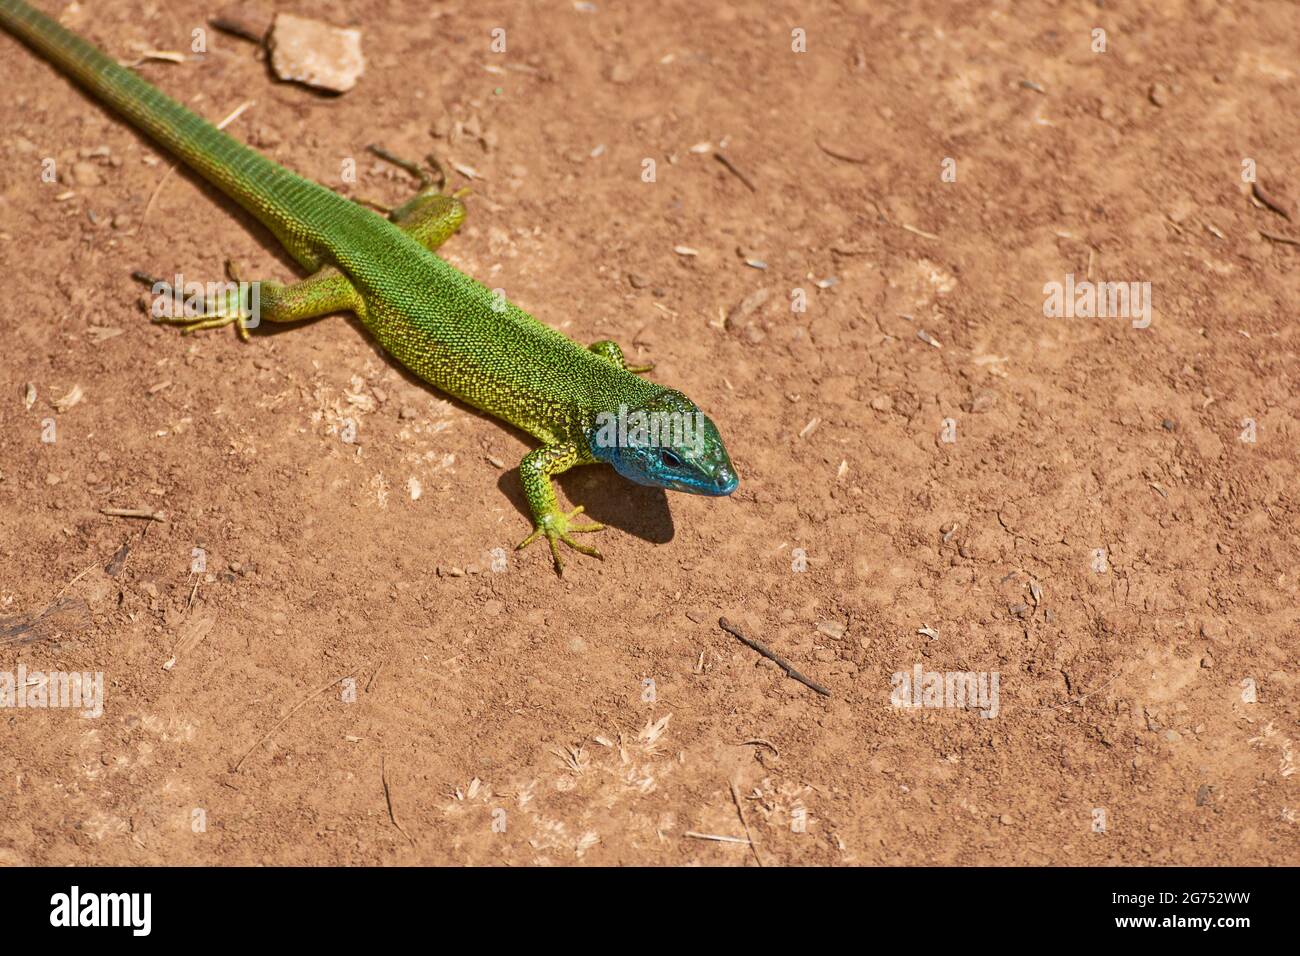 The European green lizard (Lacerta viridis) Stock Photo